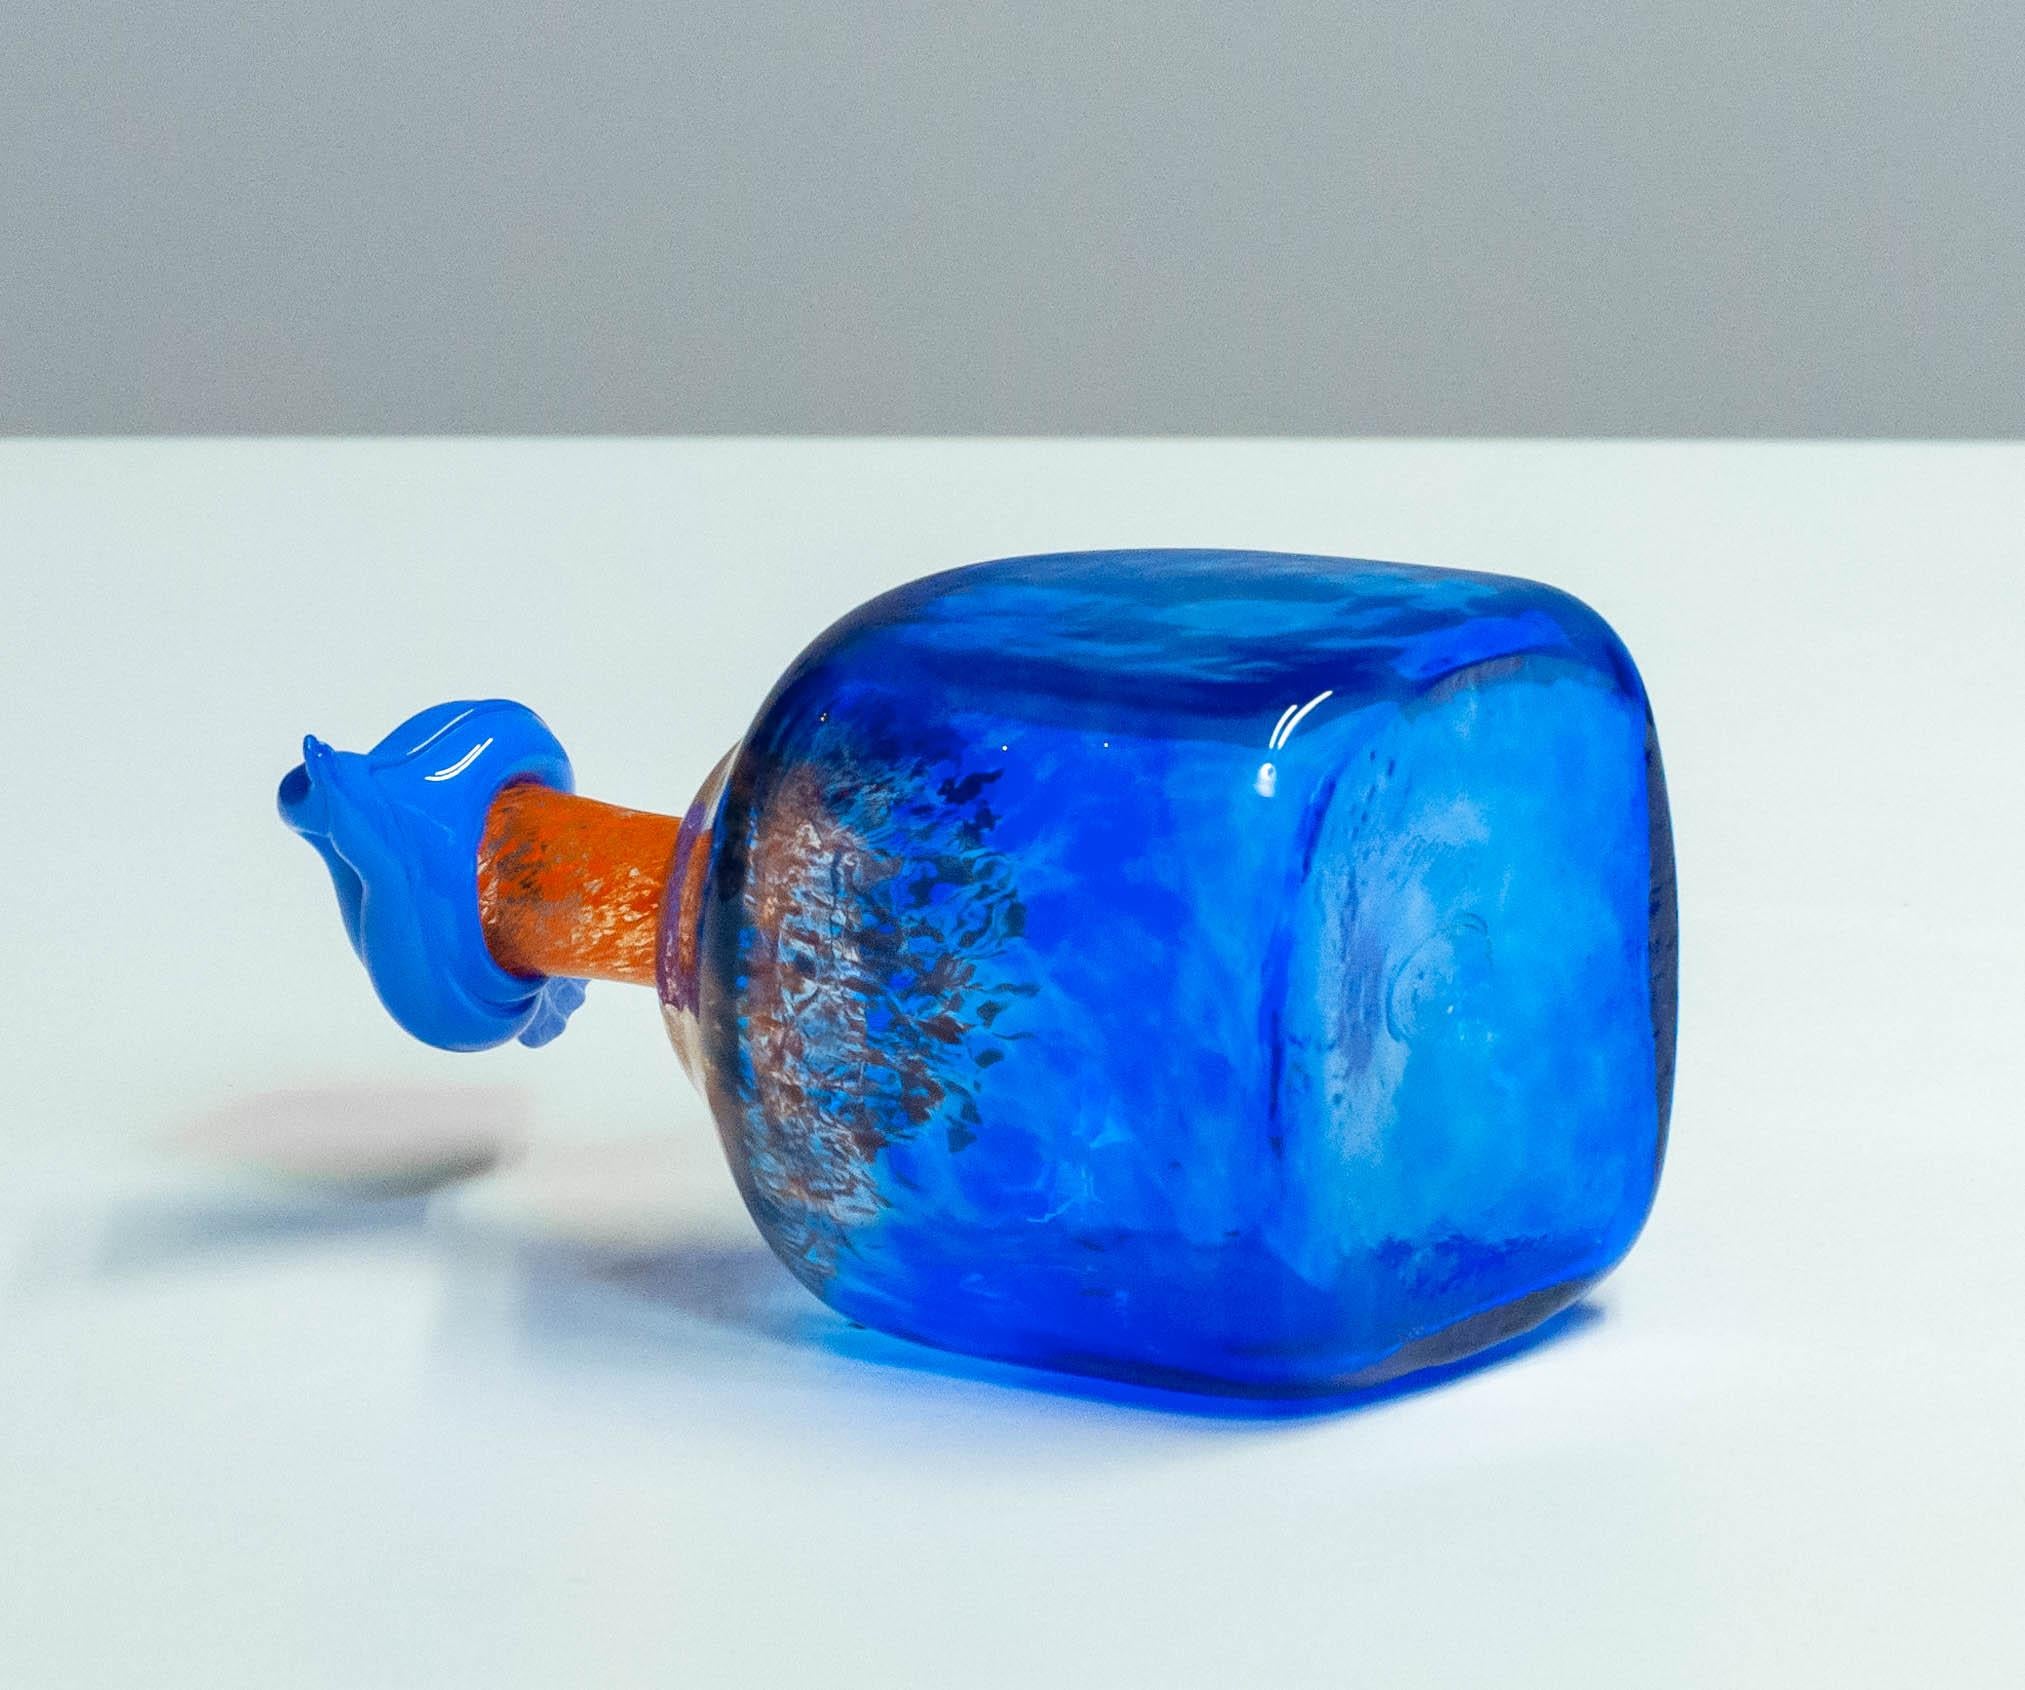 1980s Blue Art Glass Bottle Handmade by Staffan Gellerstedt at Studio Glashyttan For Sale 2